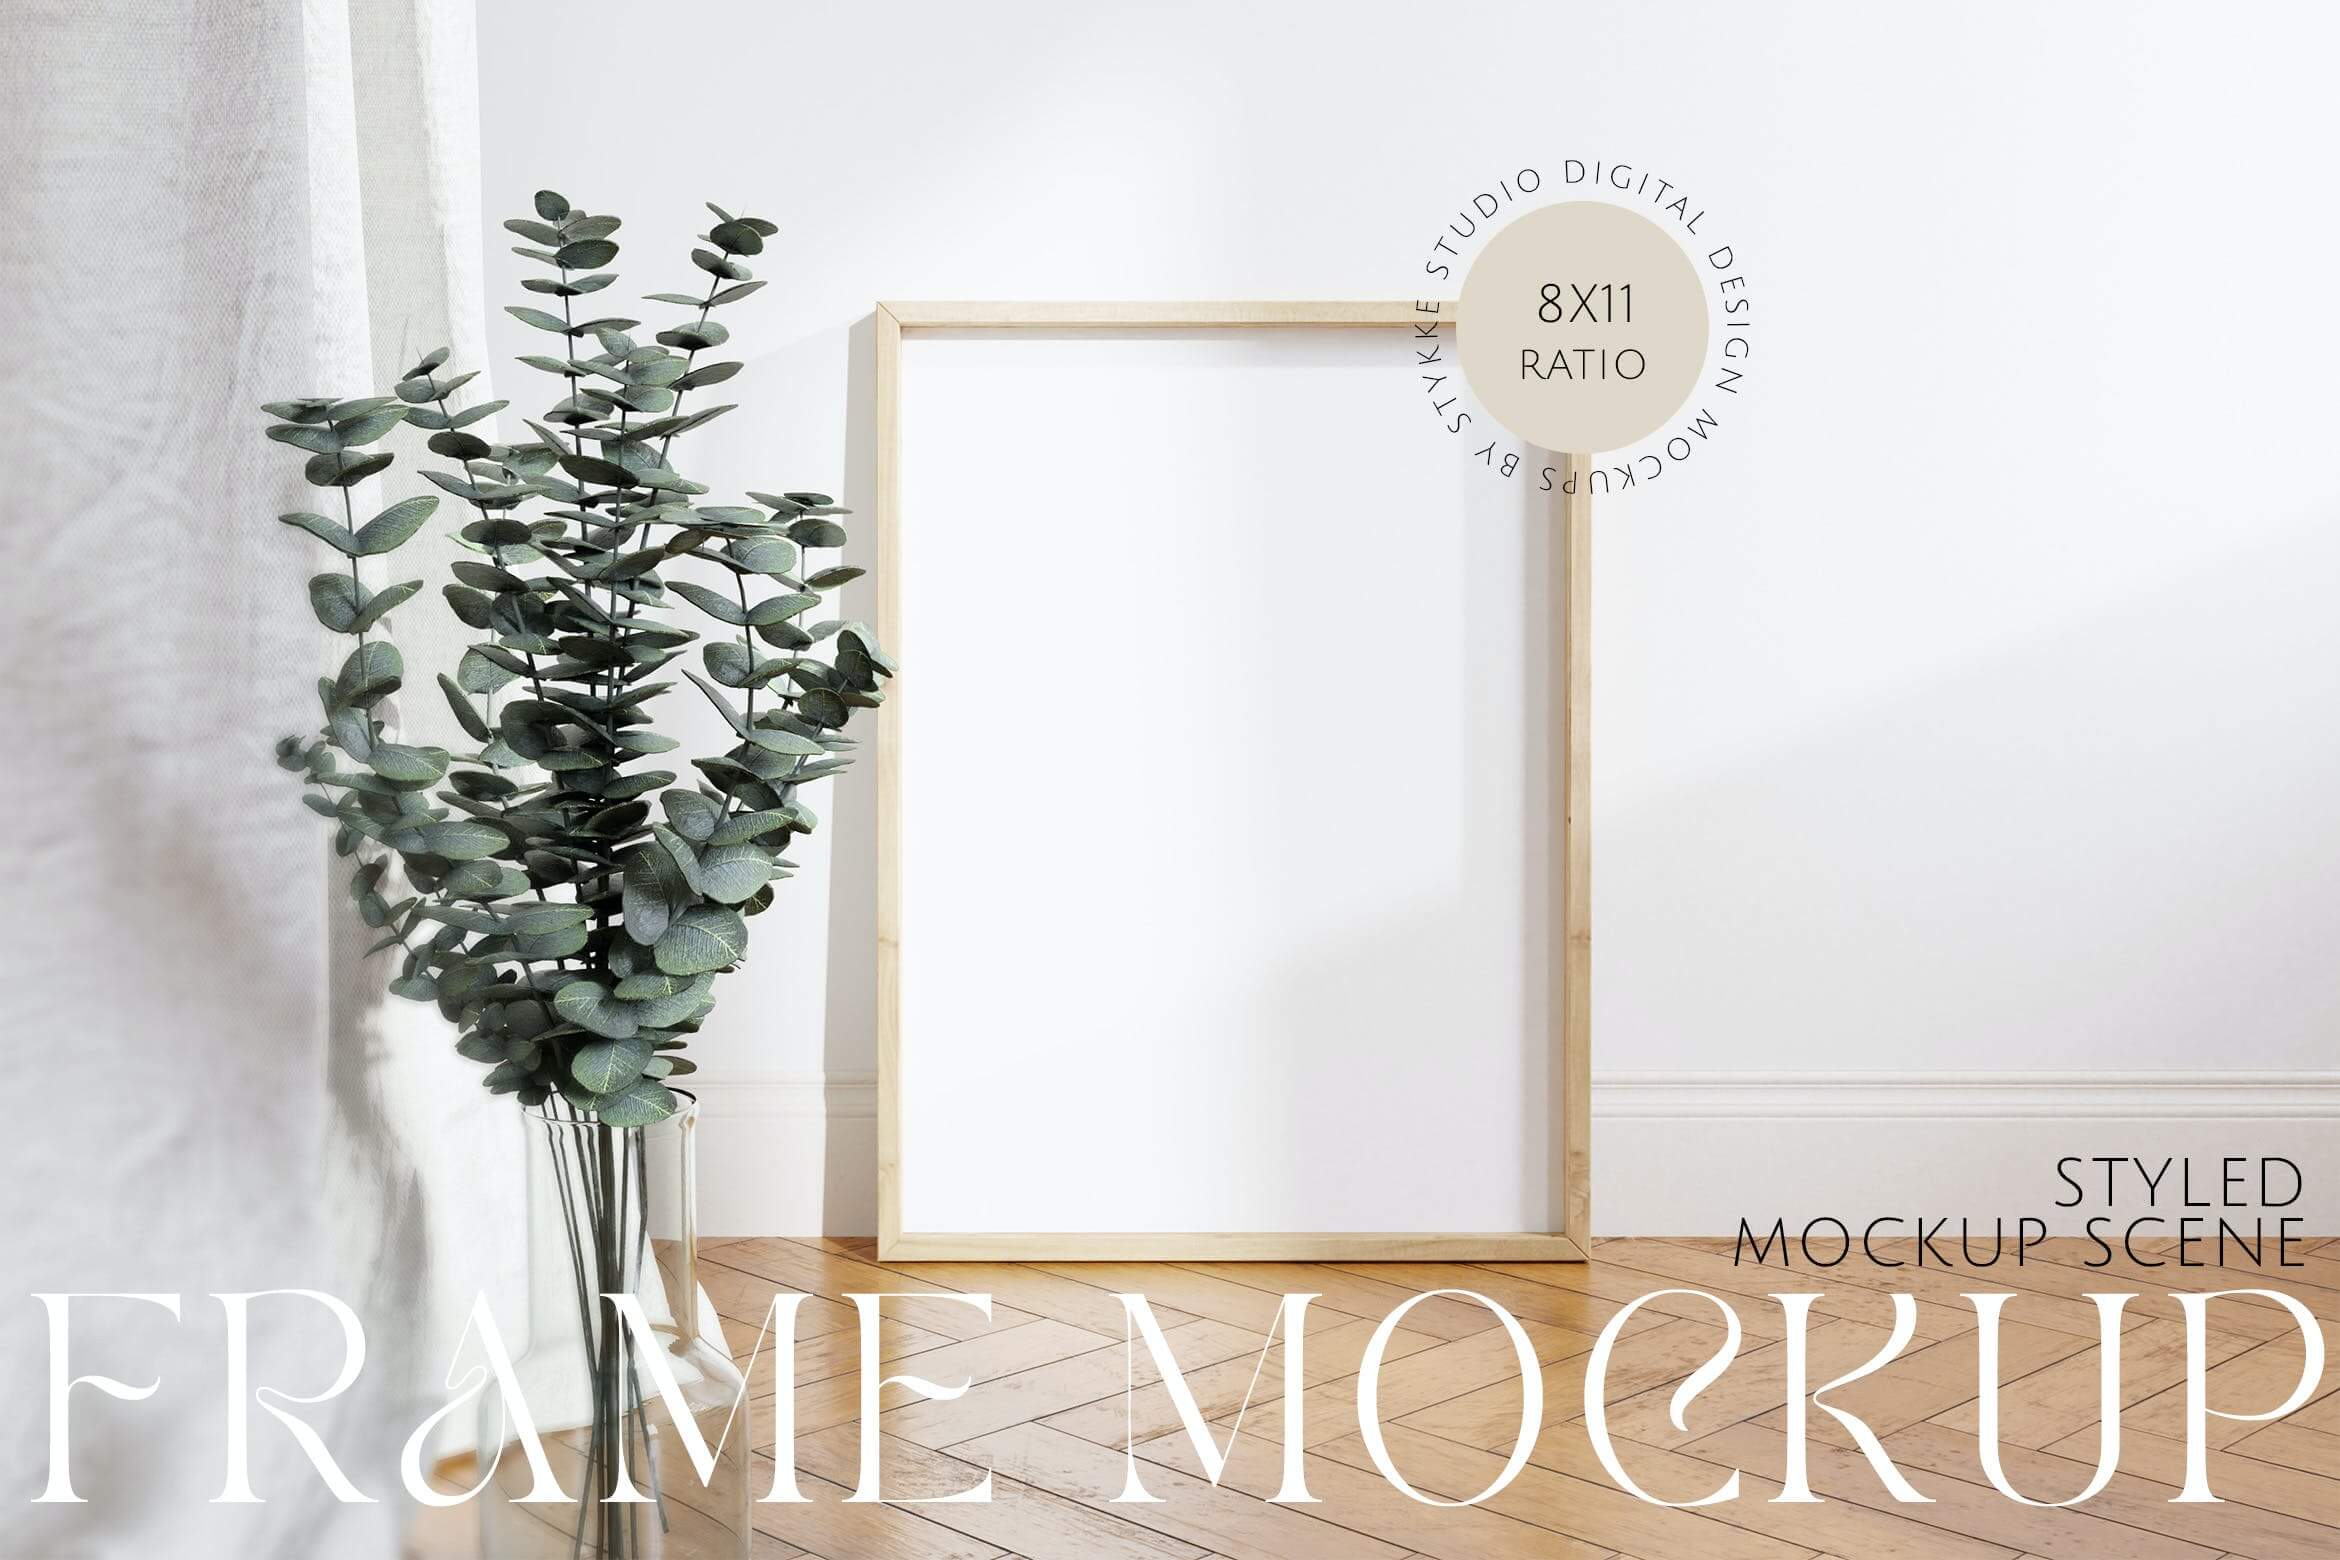 木地板上的框架模型样机素材Frame Mockup on wooden floor with eucalyptus vase插图